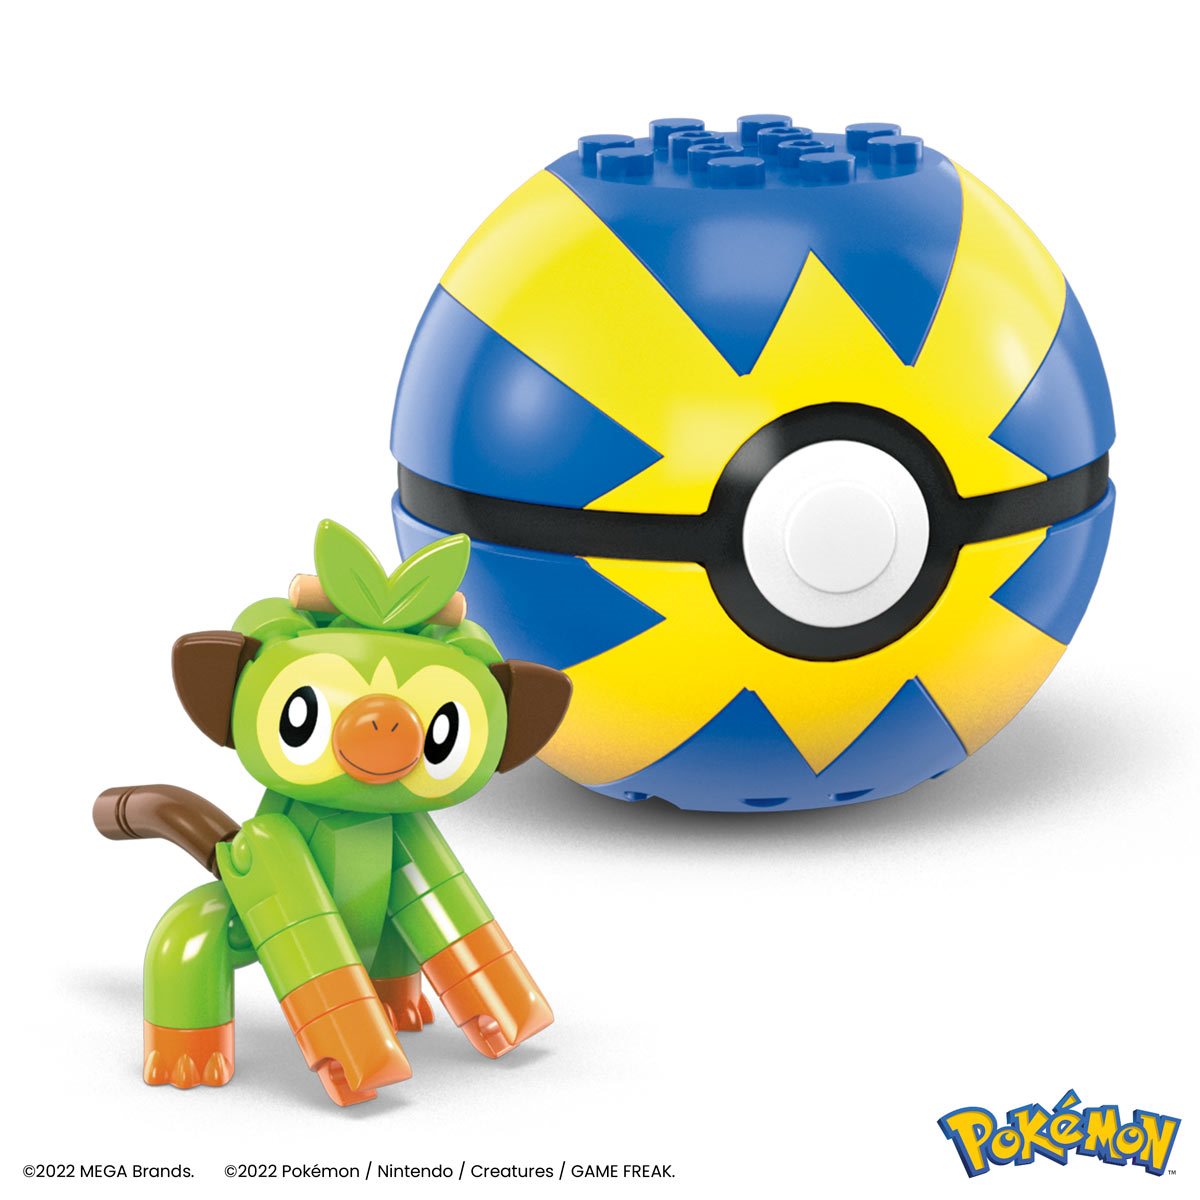 MEGA Pokemon Poke Ball Building Toy Kits with Action Figure (1